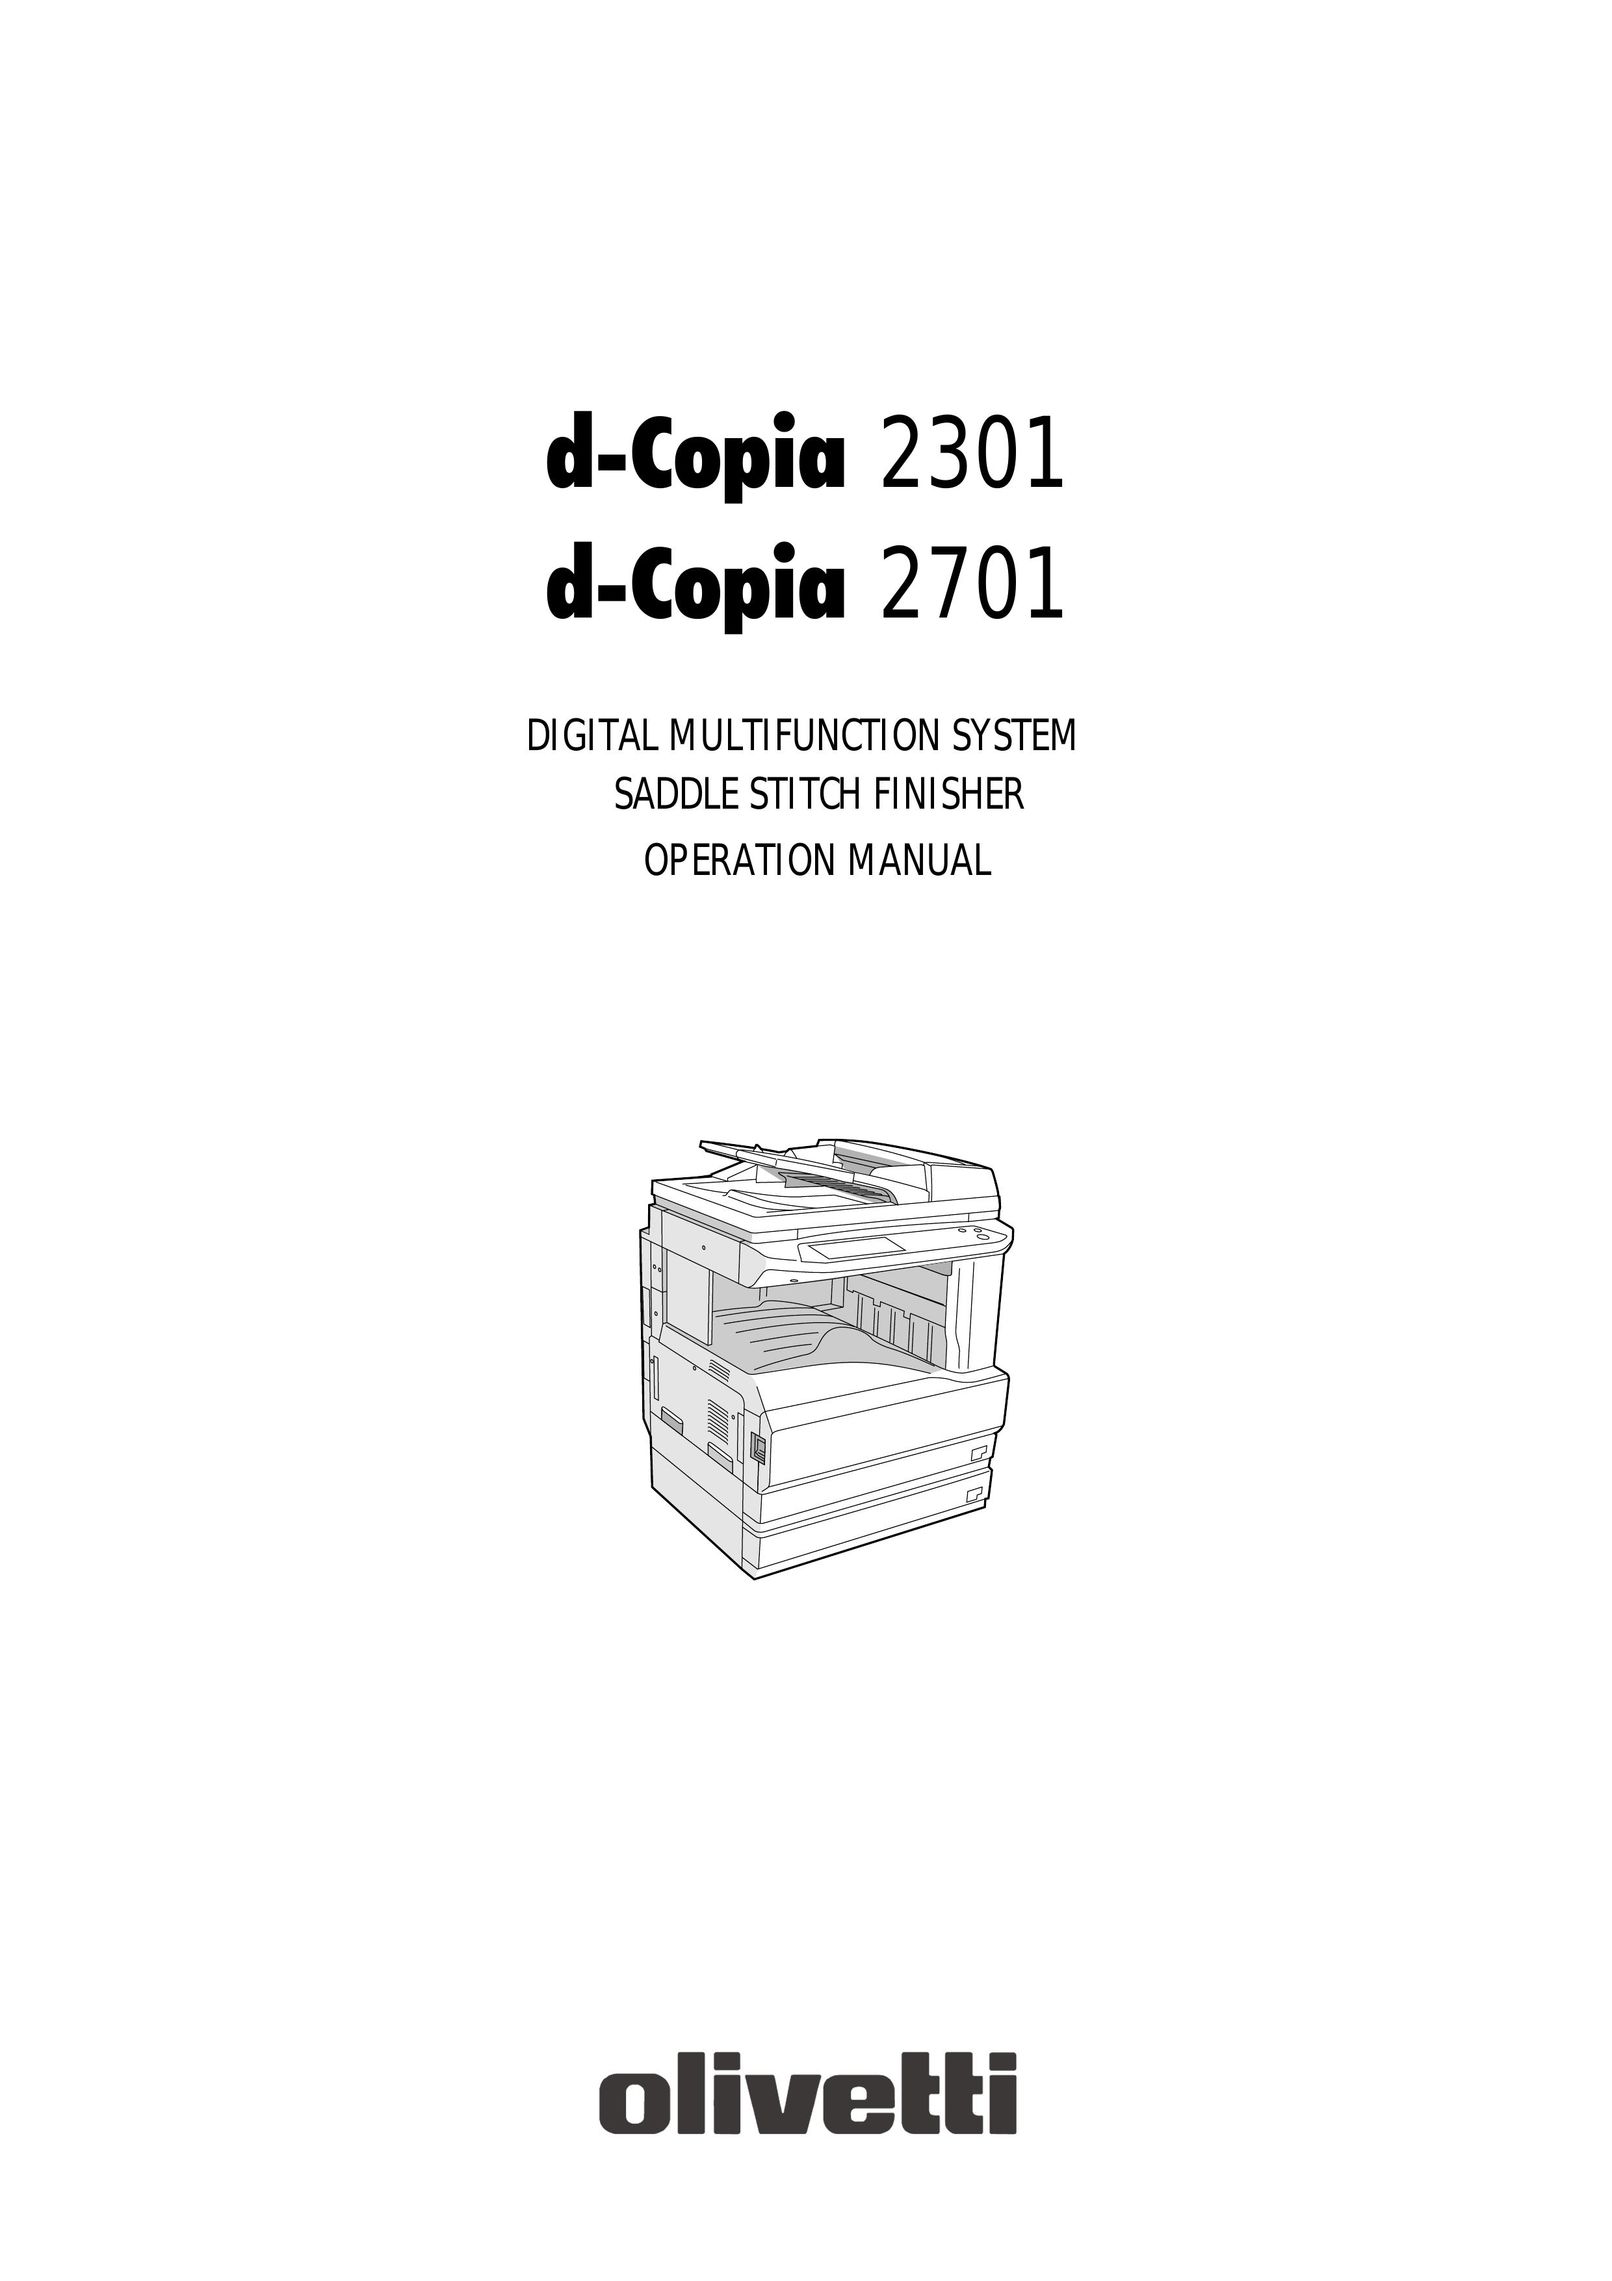 Olivetti 2301 All in One Printer User Manual